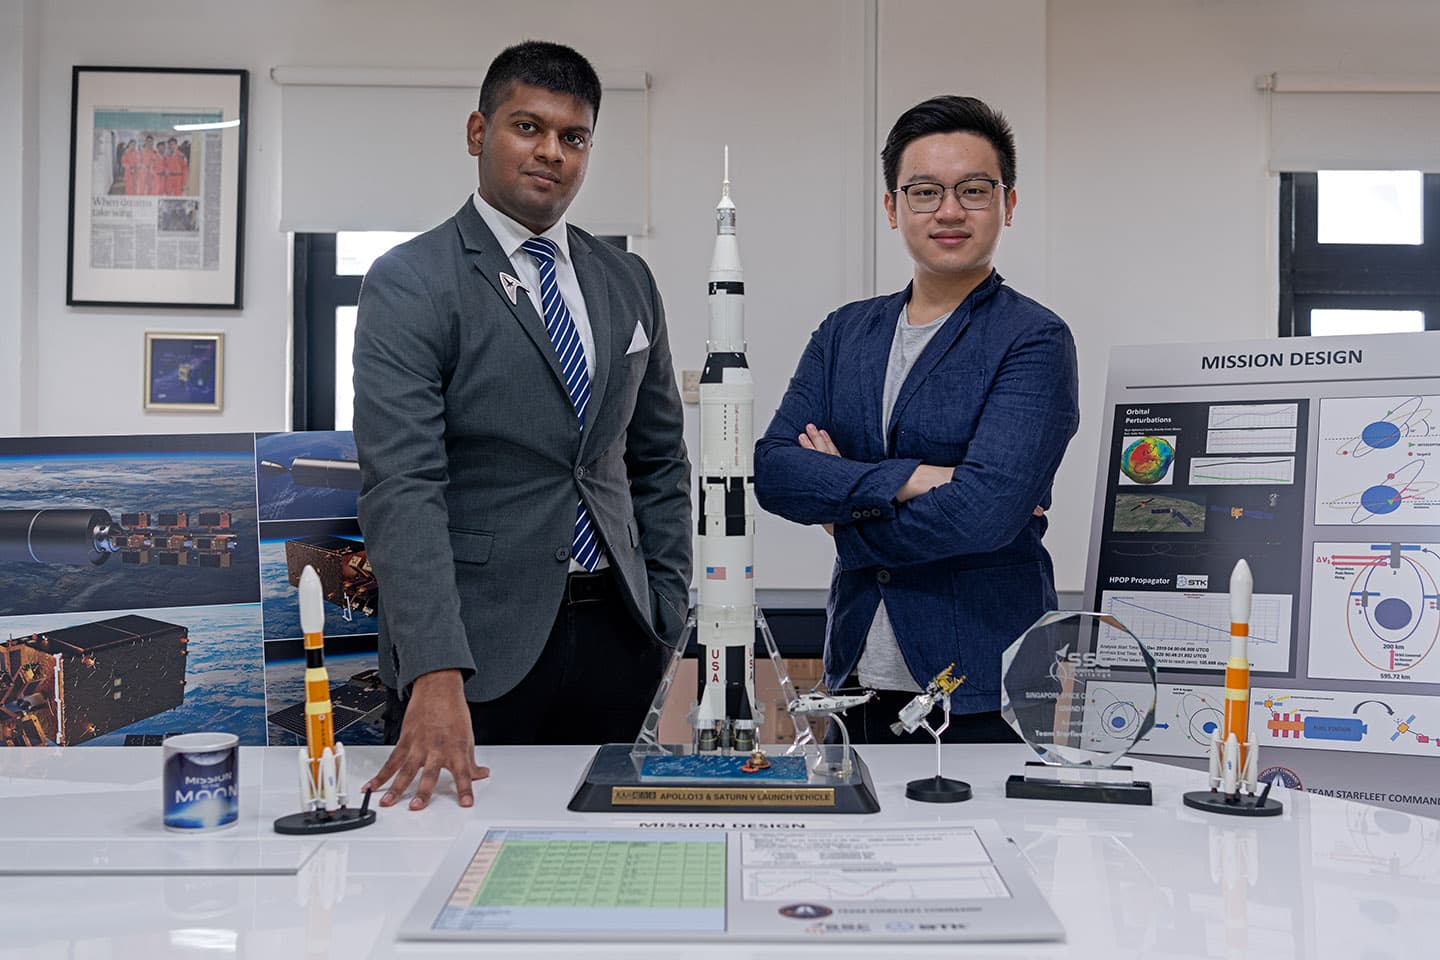 Suraya Shanmugam (L) and Jacob Tang (R) of Starfleet, the winning team of the 2020 Singapore Space Challenge.